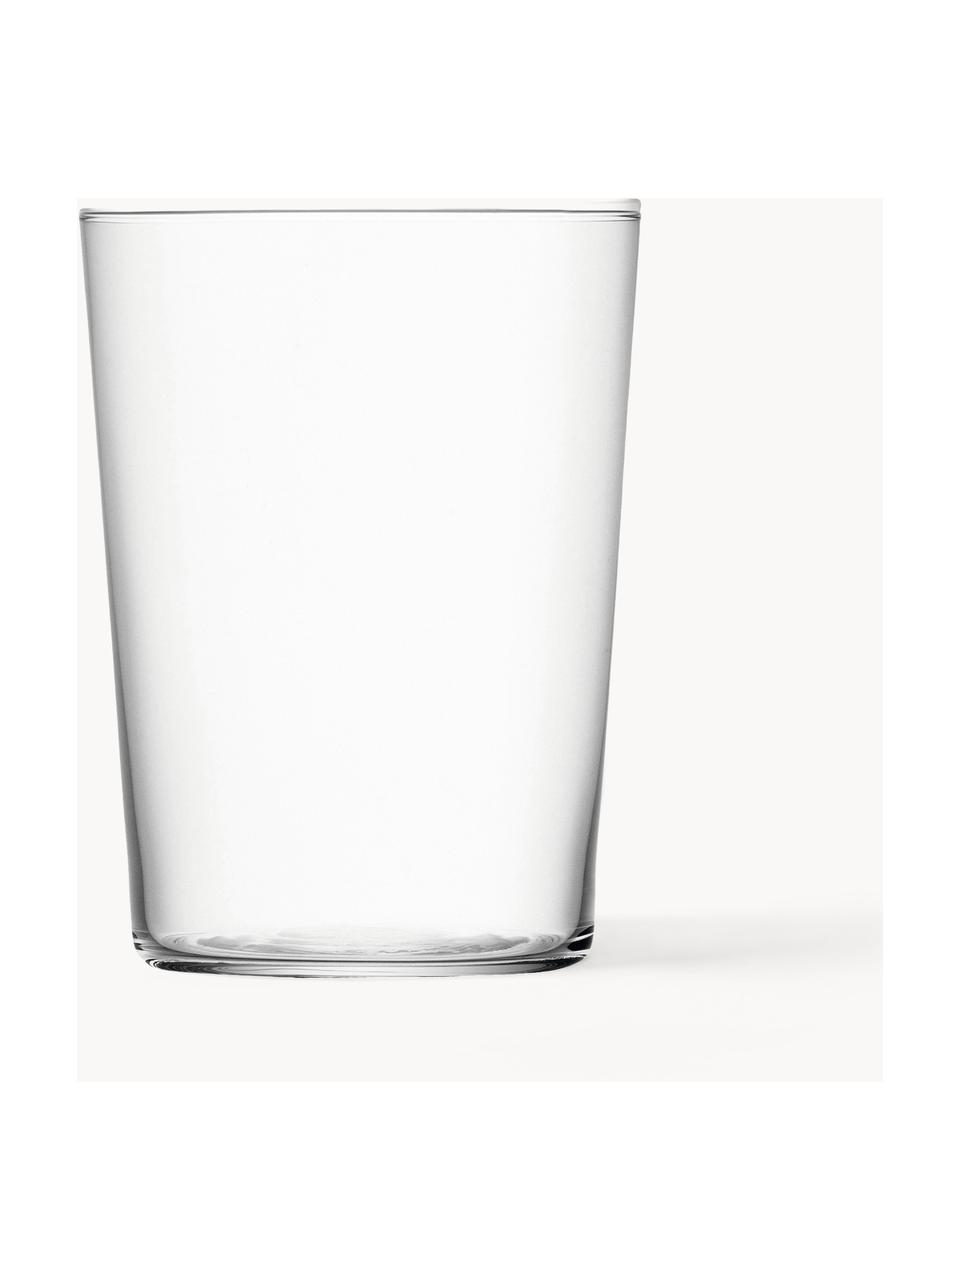 Filigrane Wassergläser Gio, 6 Stück, Glas, Transparent, Ø 9 x H 12 cm, 560 ml